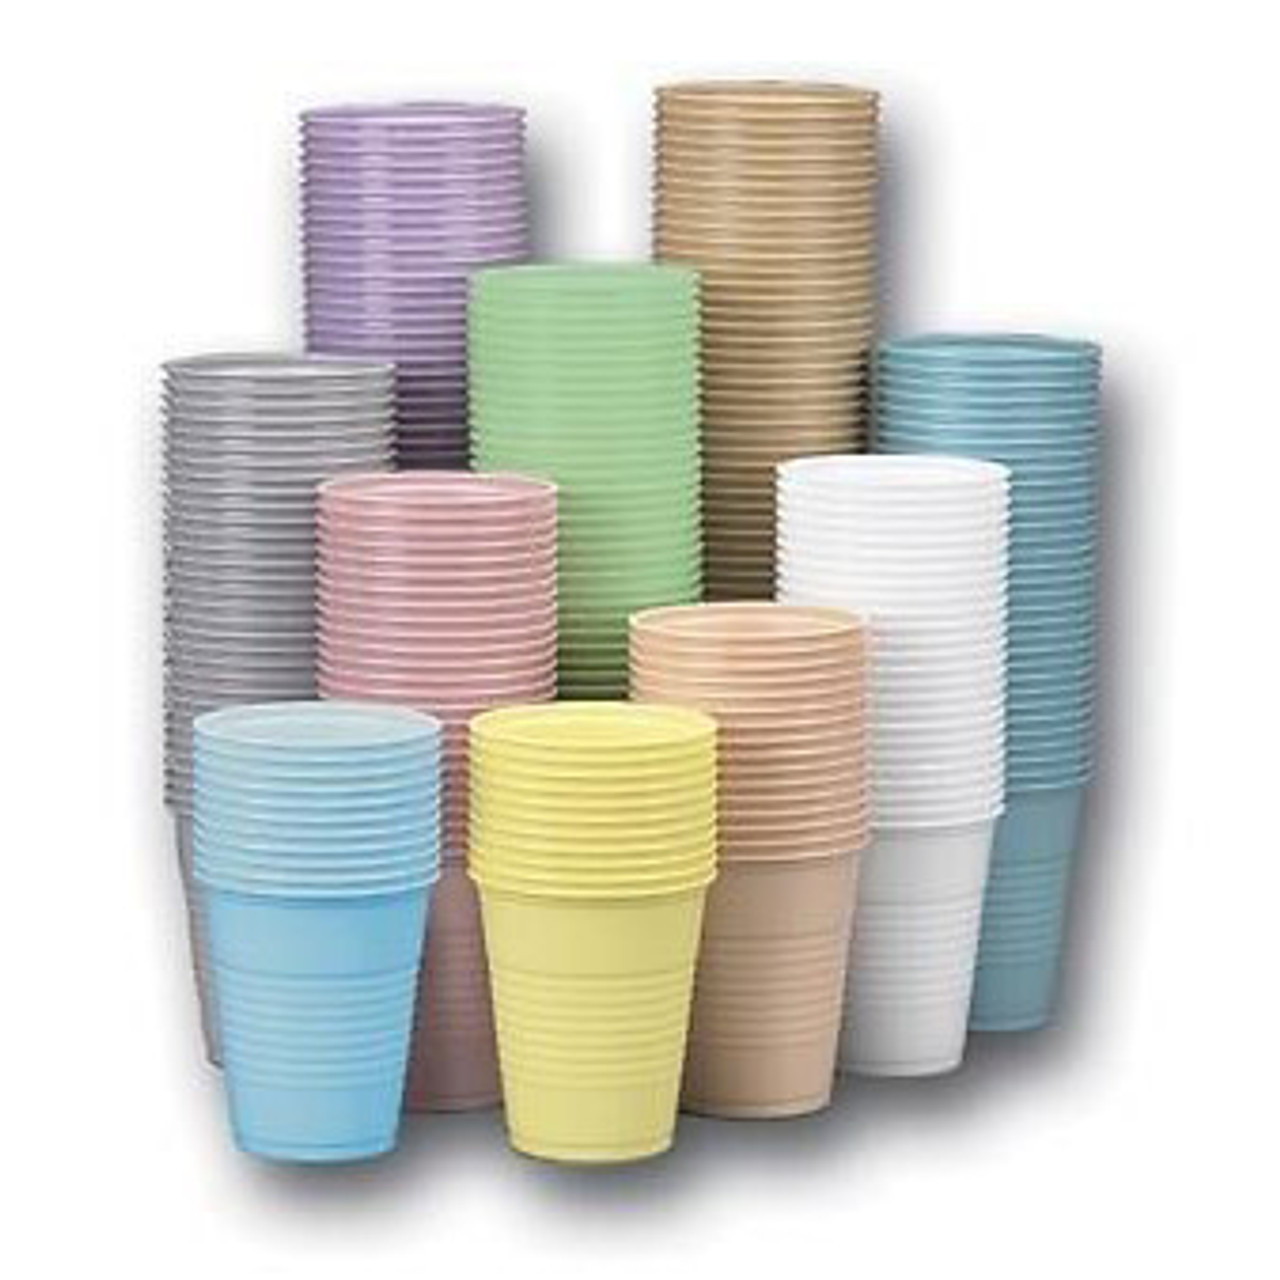 DDS Dental Supplies - Crosstex Cups Plastic 5oz - White